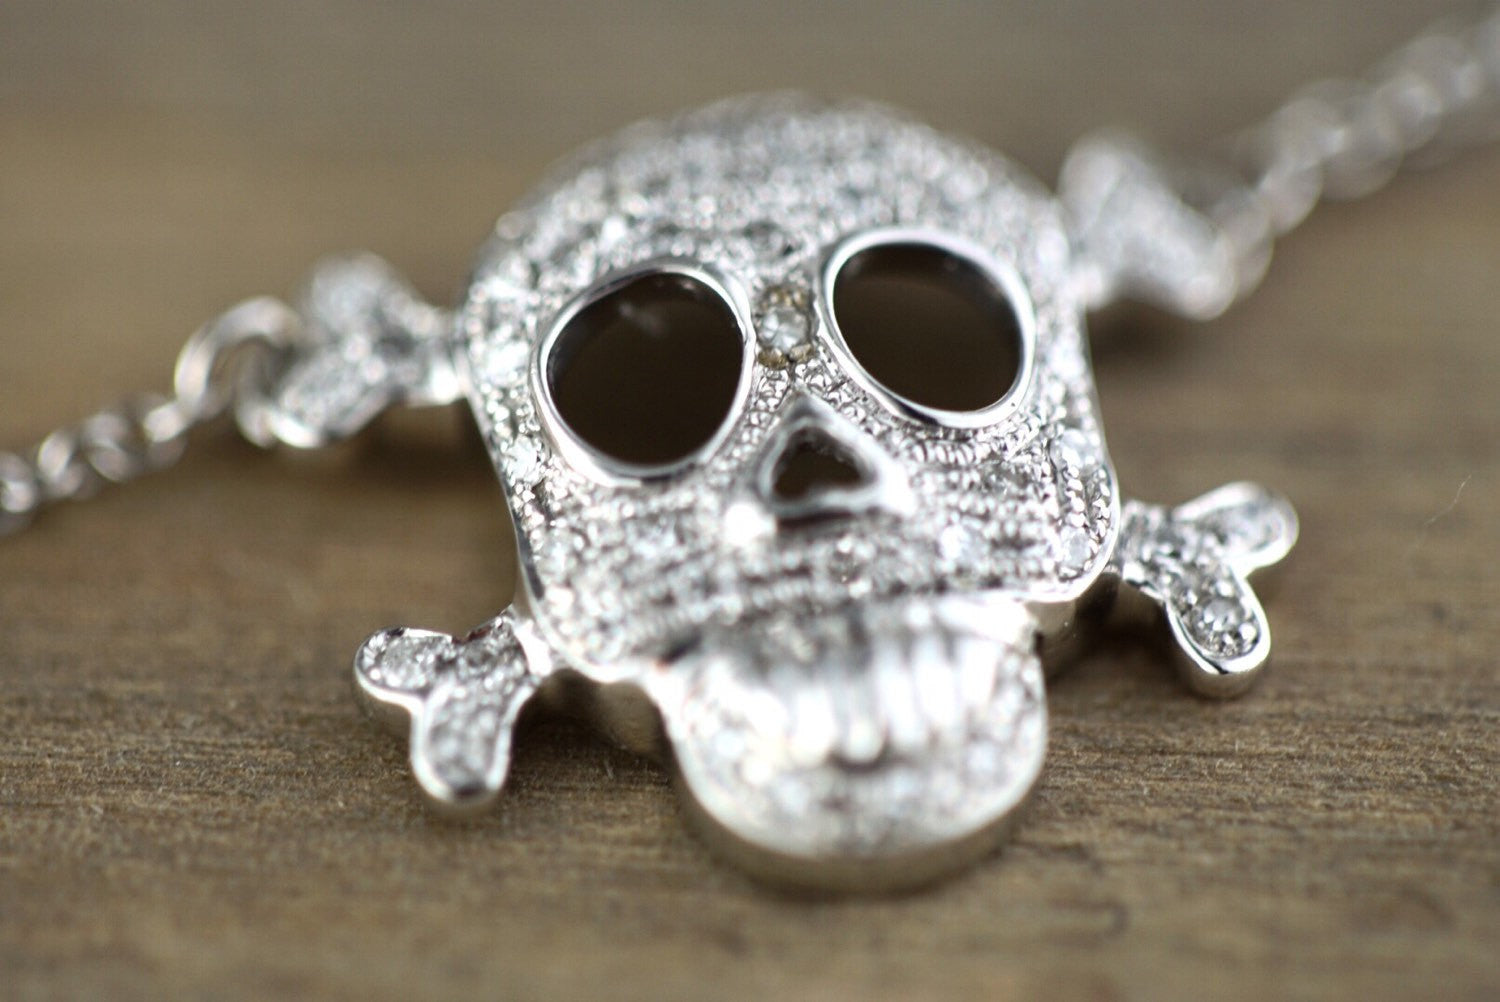 14k White Gold Skull Pave Diamond Dainty Pendant Charm Pirate Dia de los Muertos Day of the Dead